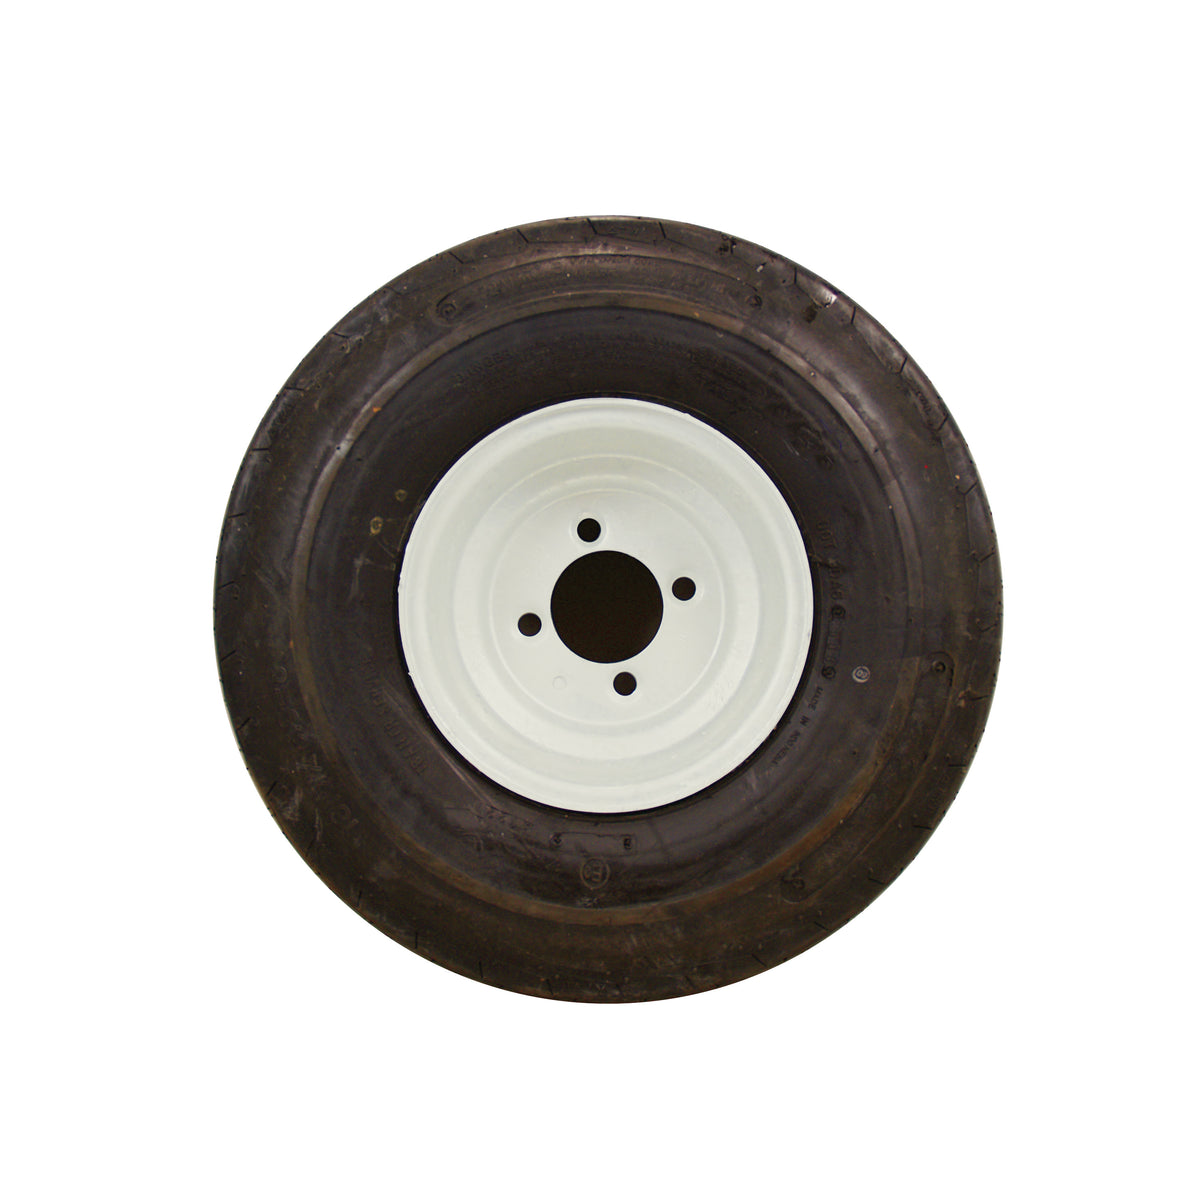 Americana Tire and Wheel 30150 Economy Bias Tire and Wheel 5.70 x 8 C/5-Hole - Galvanized Standard Rim